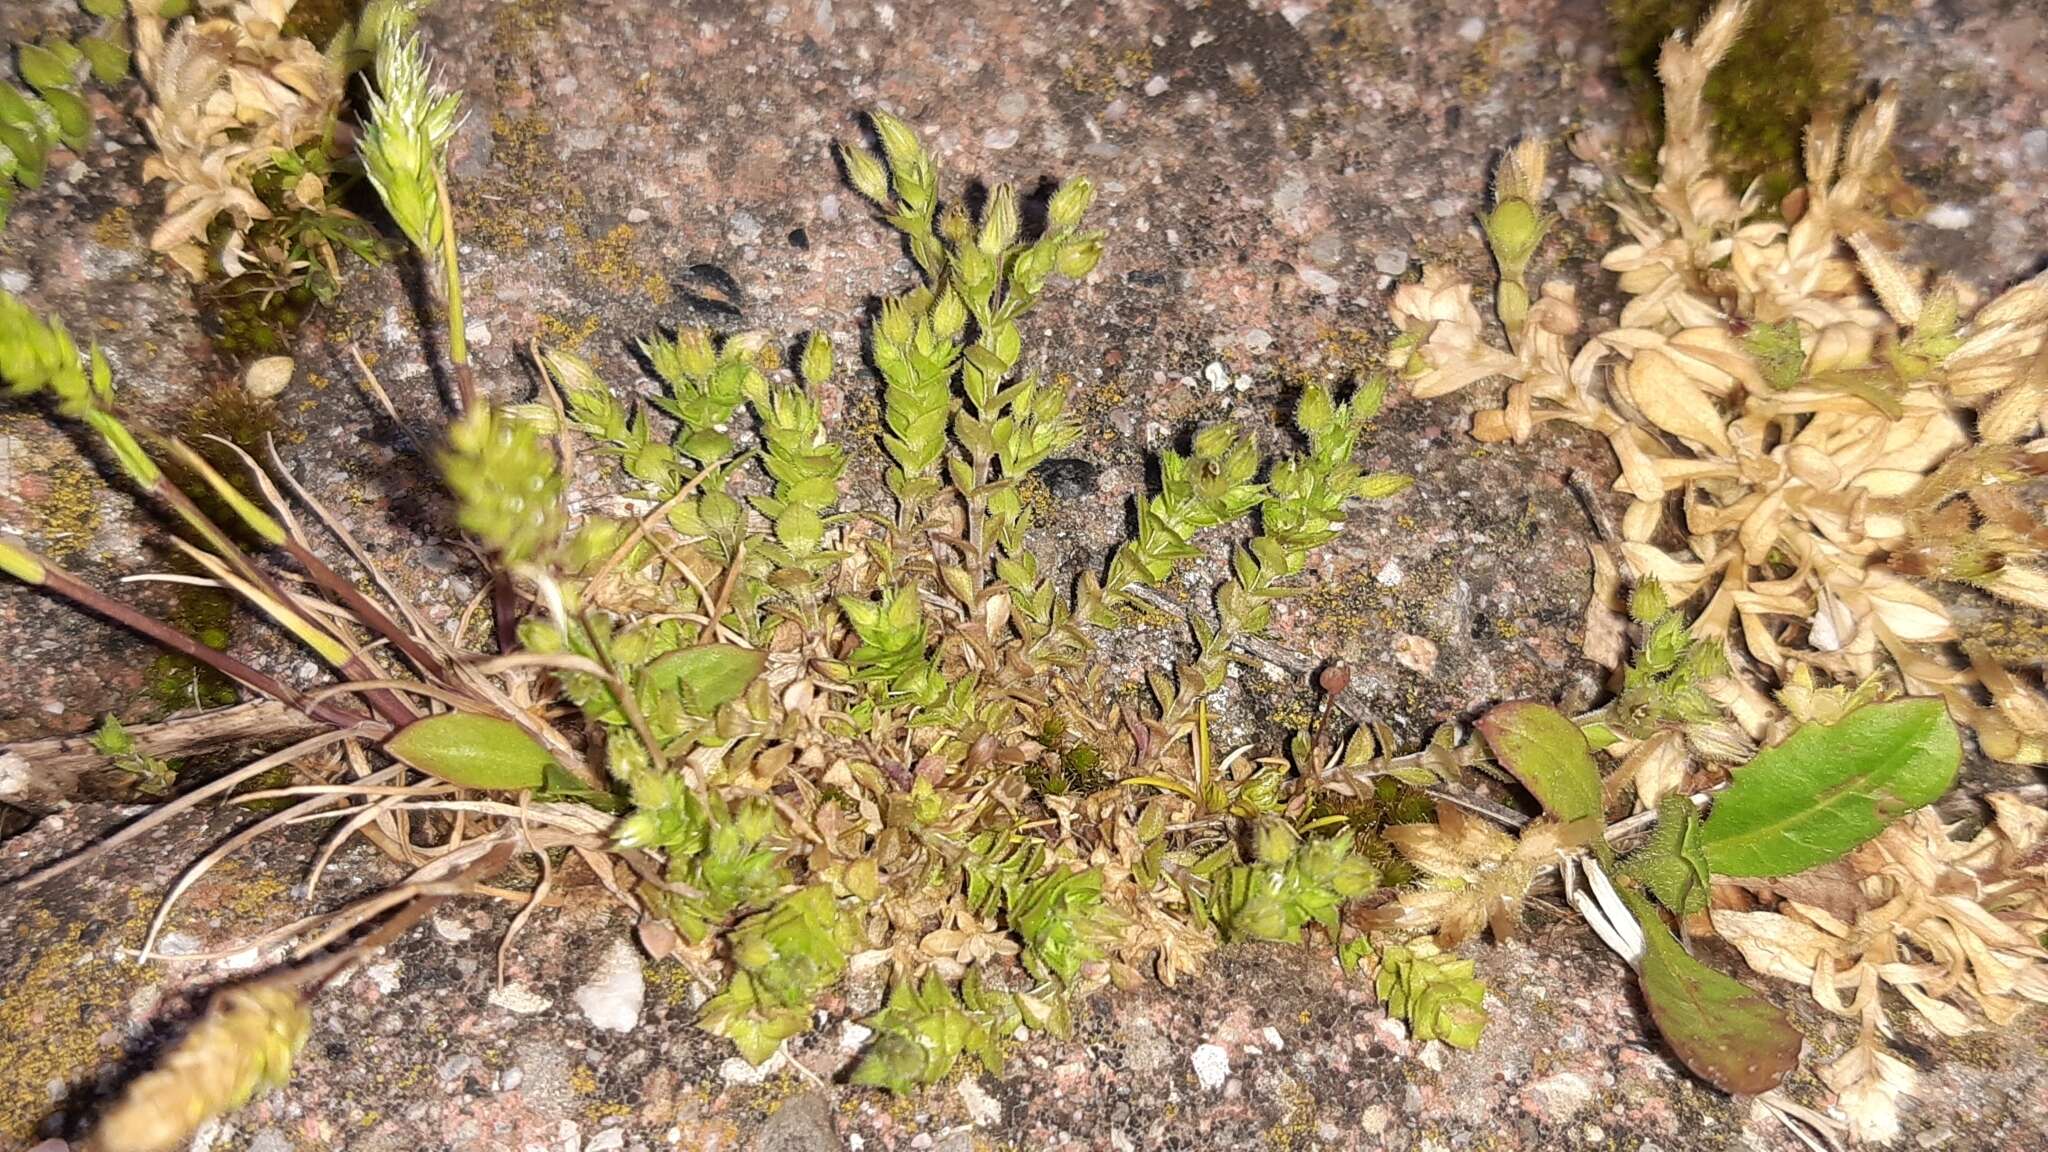 Image of thyme-leaved sandwort